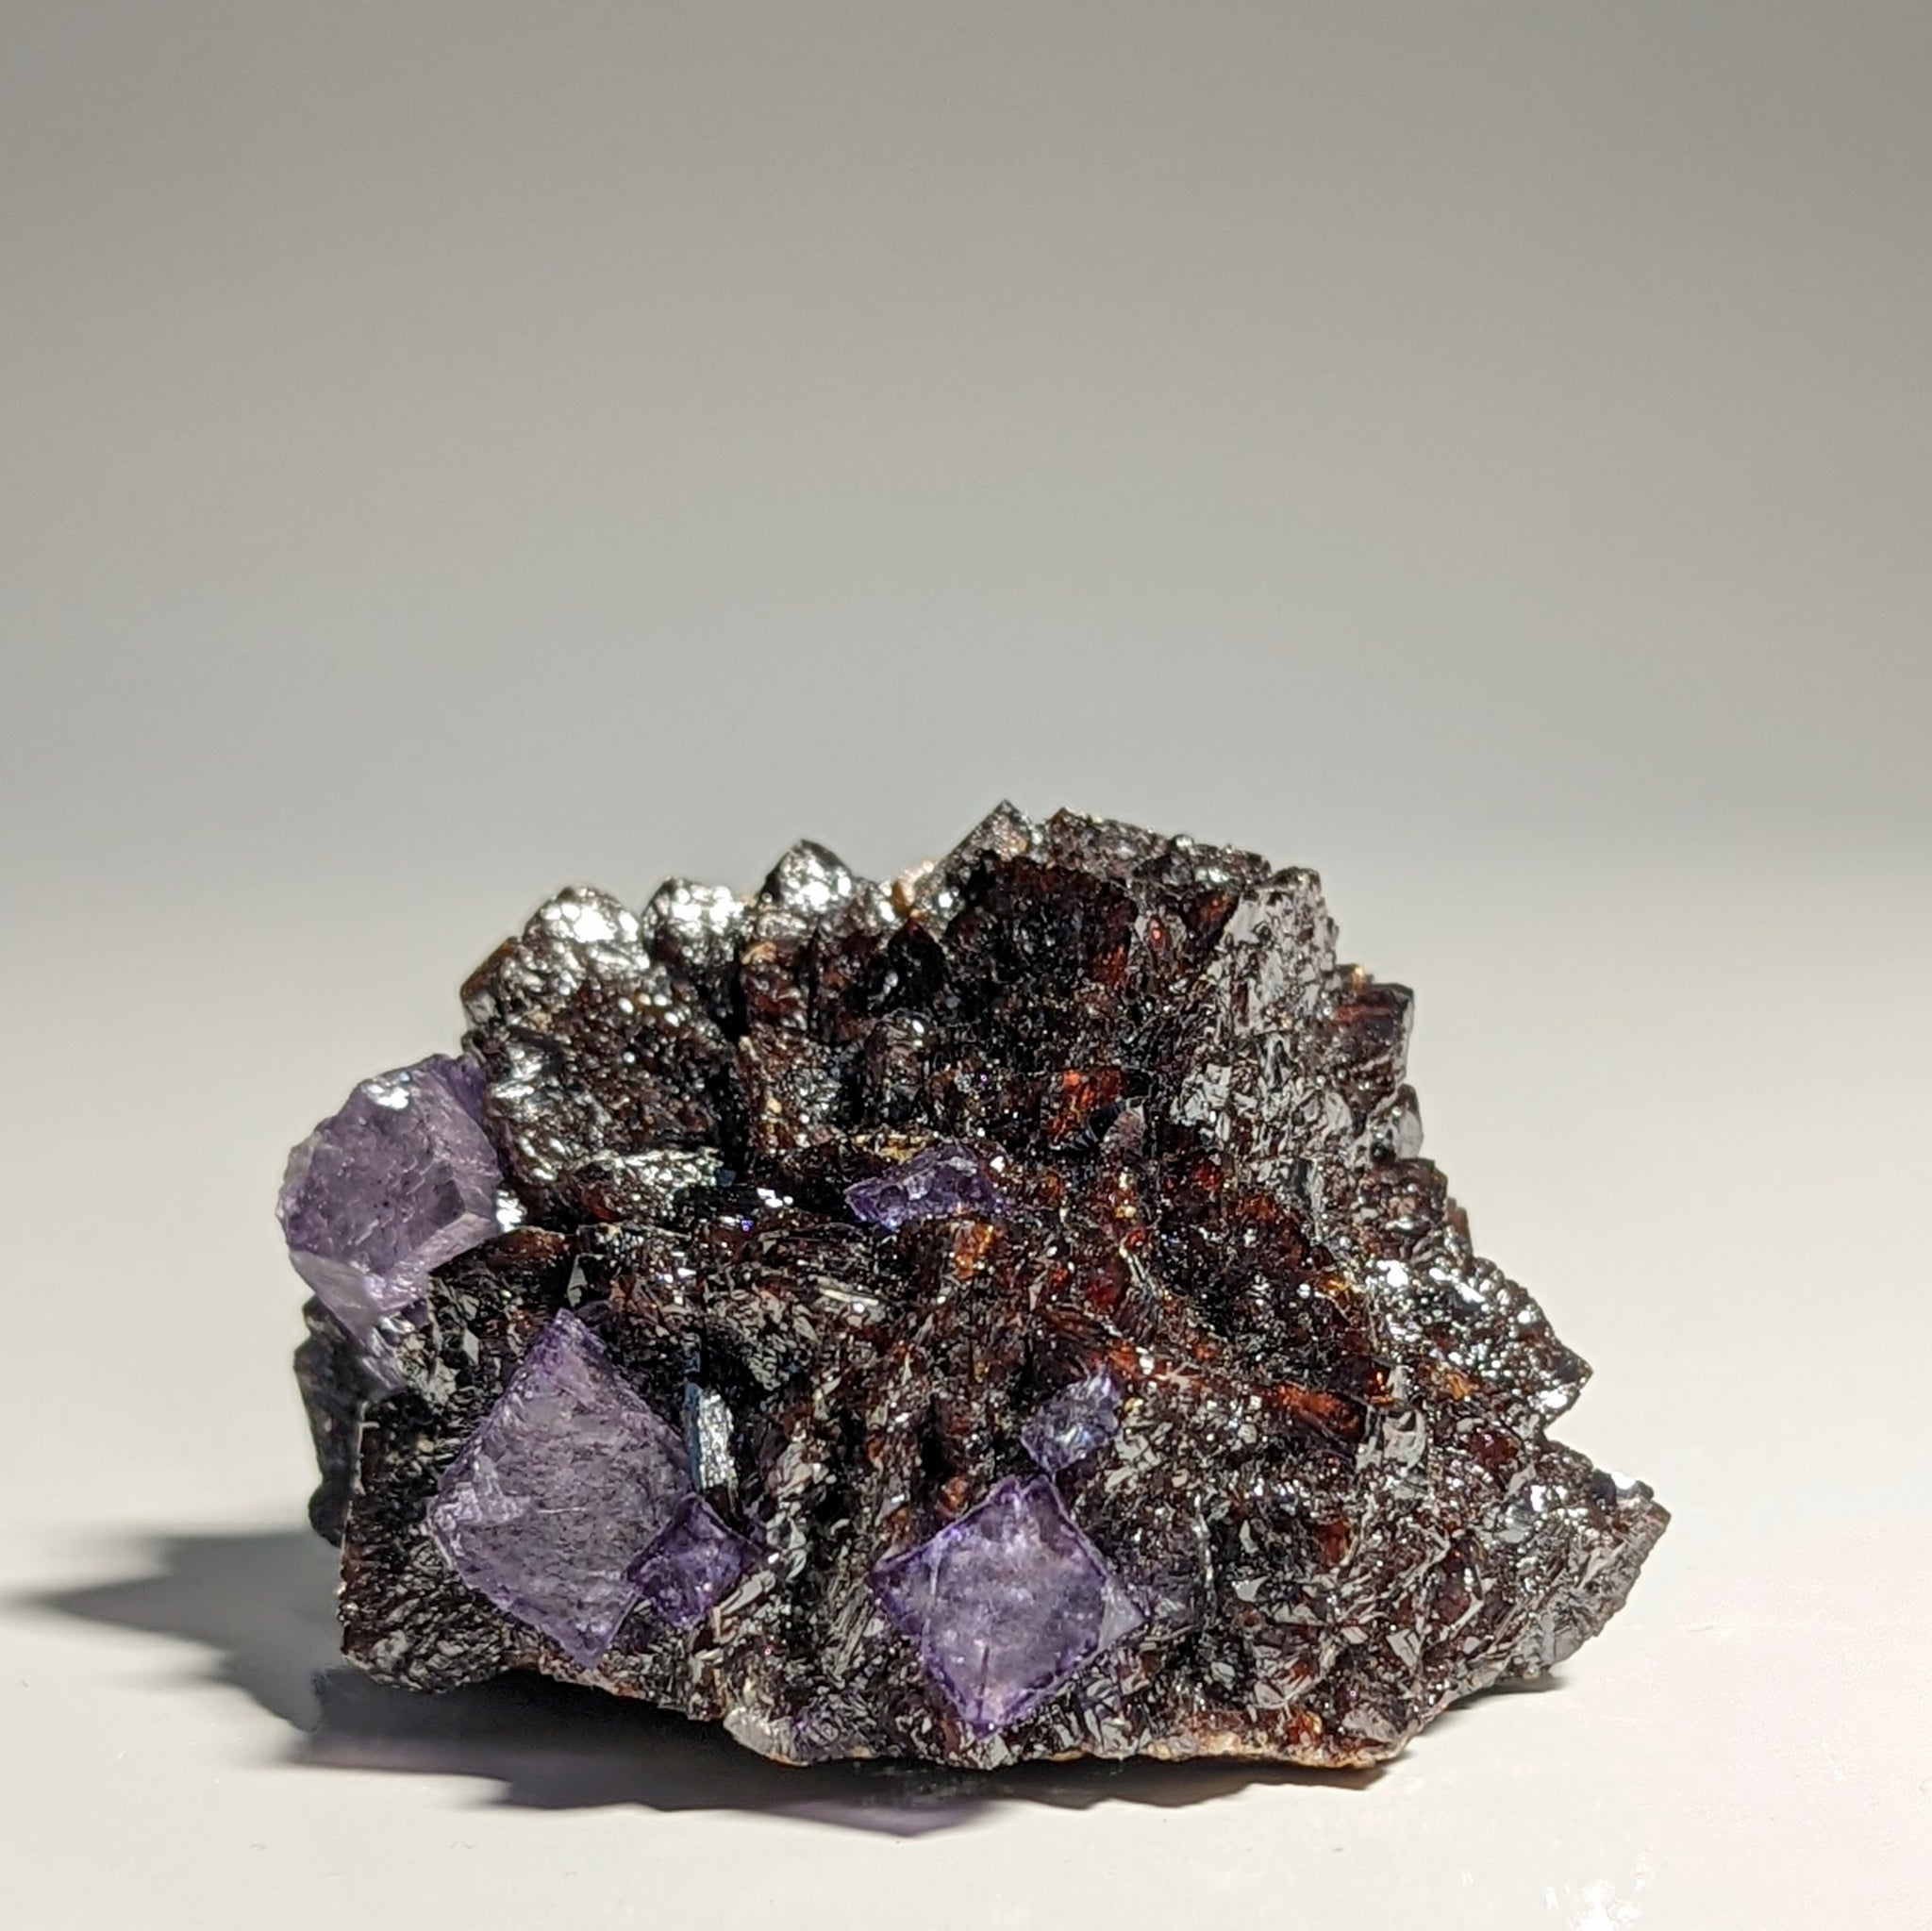 Cubic Purple Fluorite on Sphalerite, Vibrant purple, red, and black colors